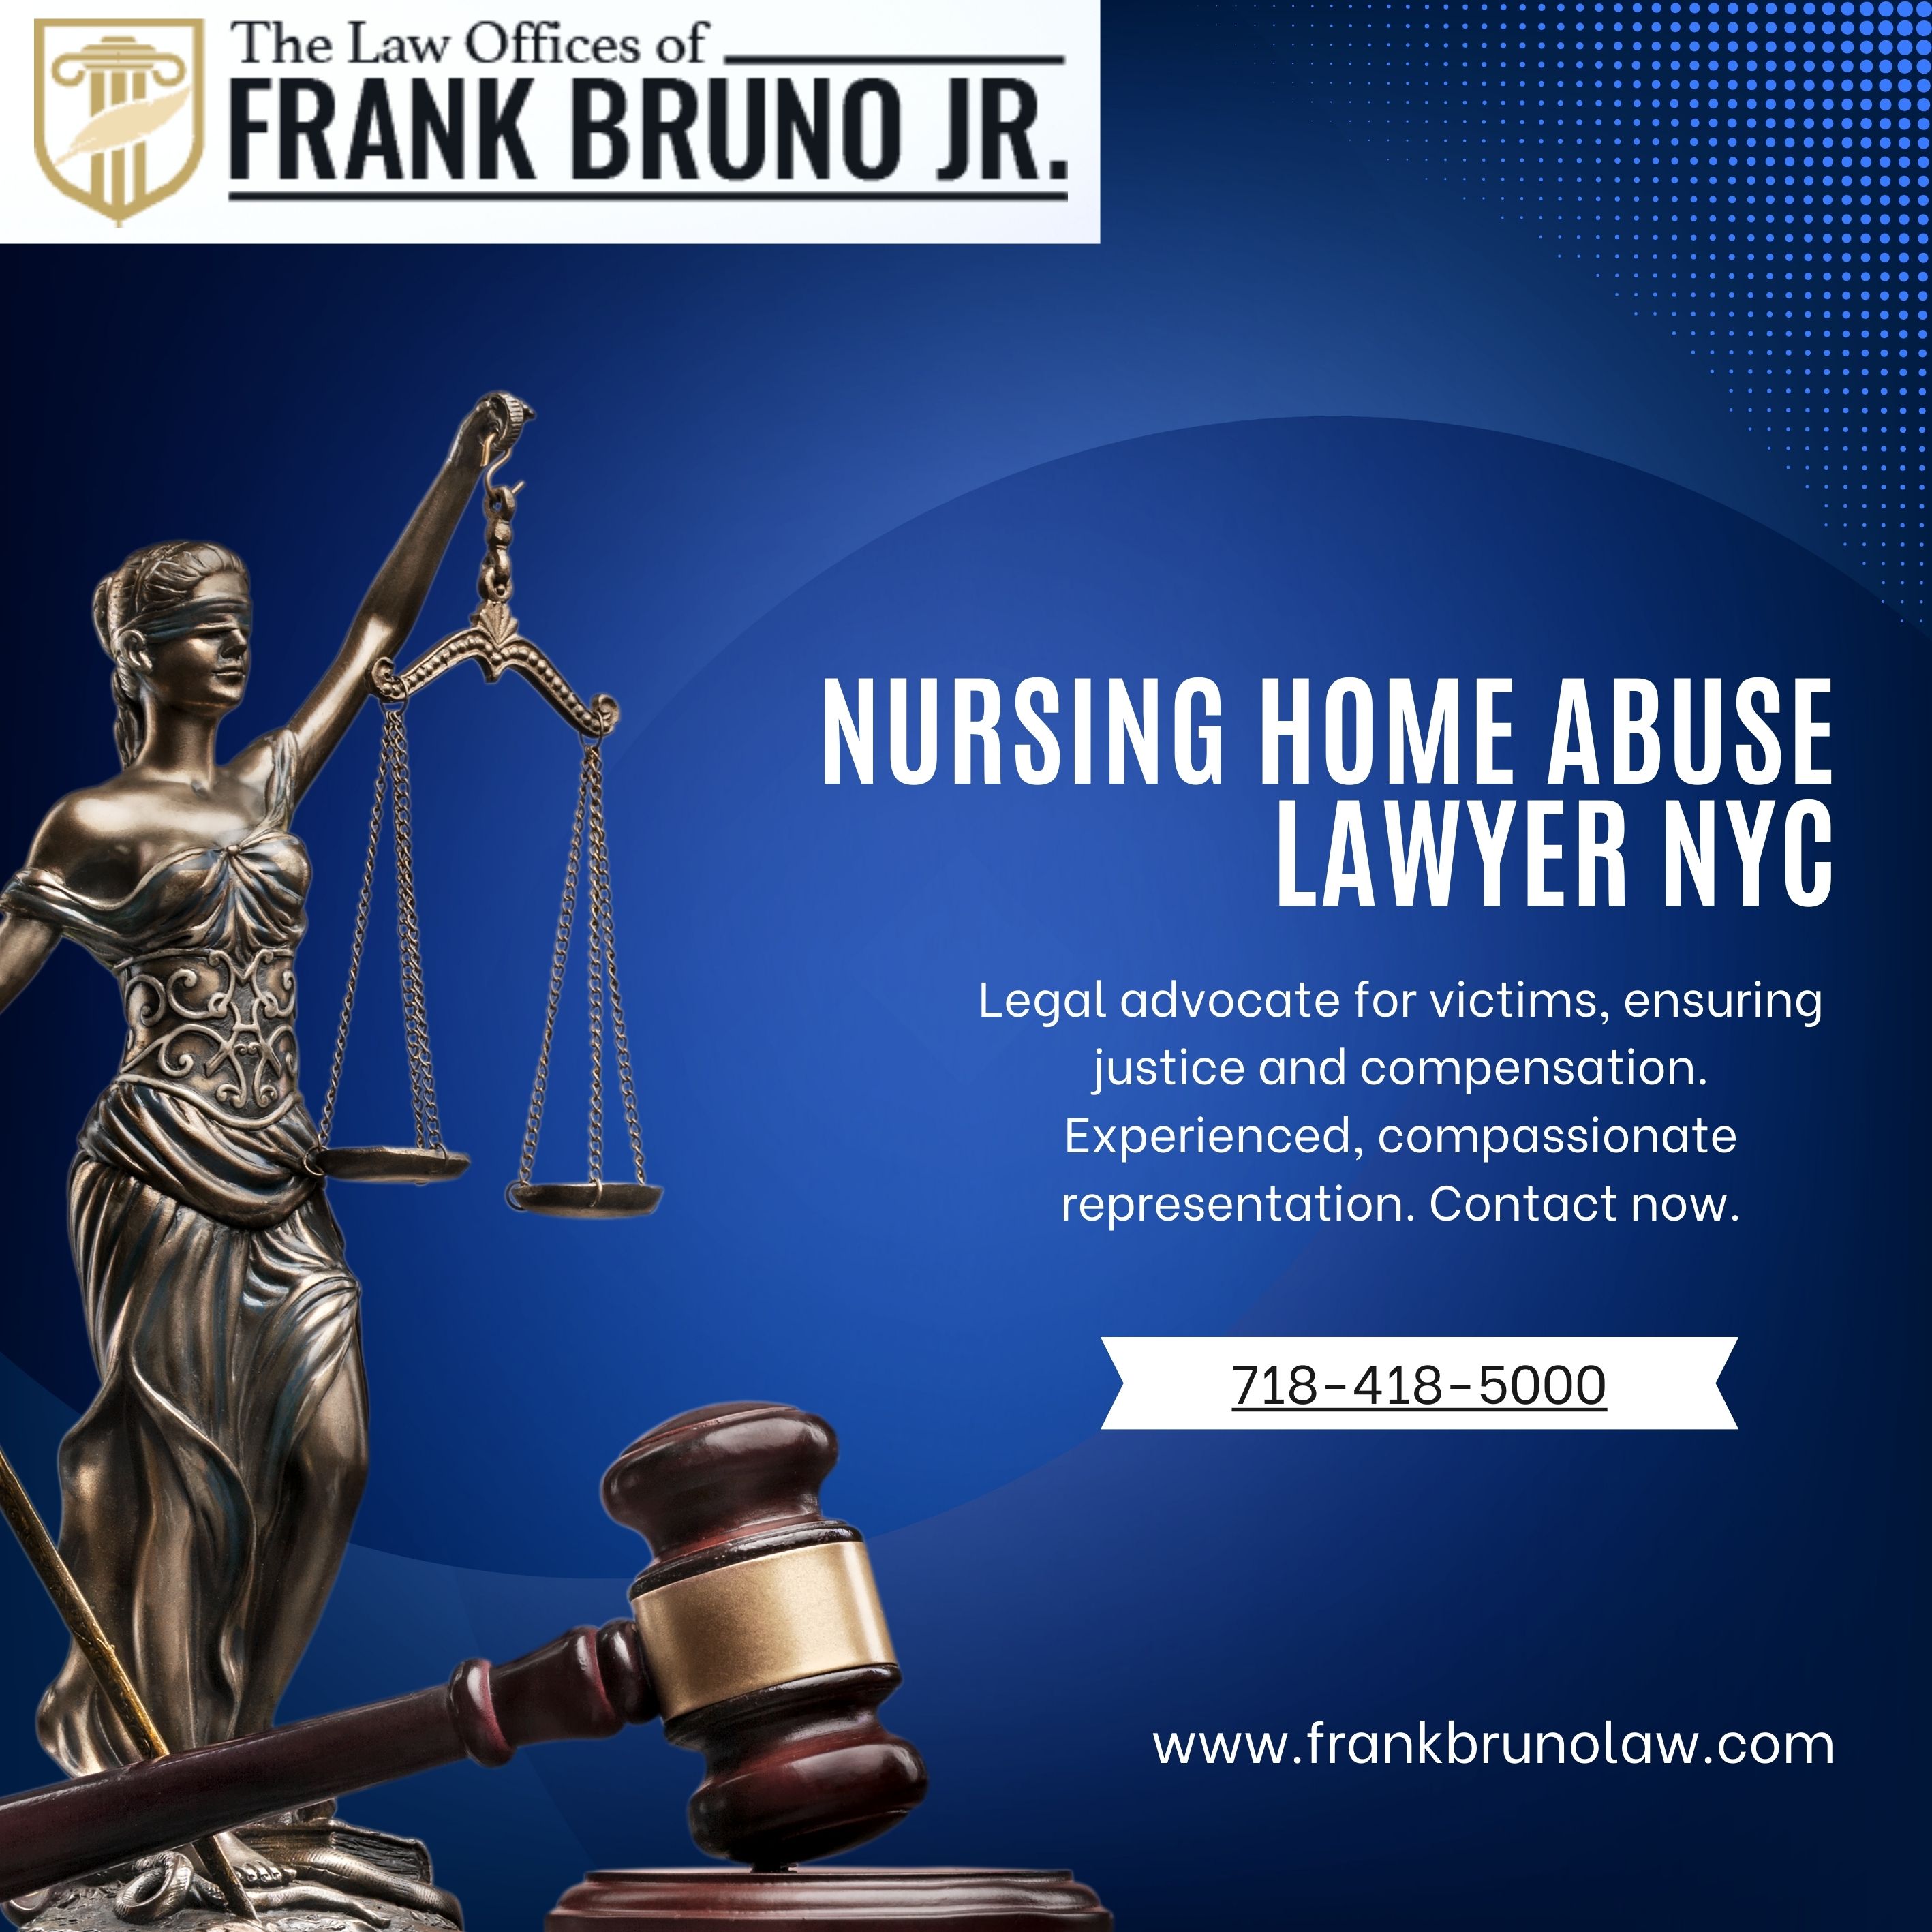 Real Estate Attorney NYC - New York - New York ID1547852